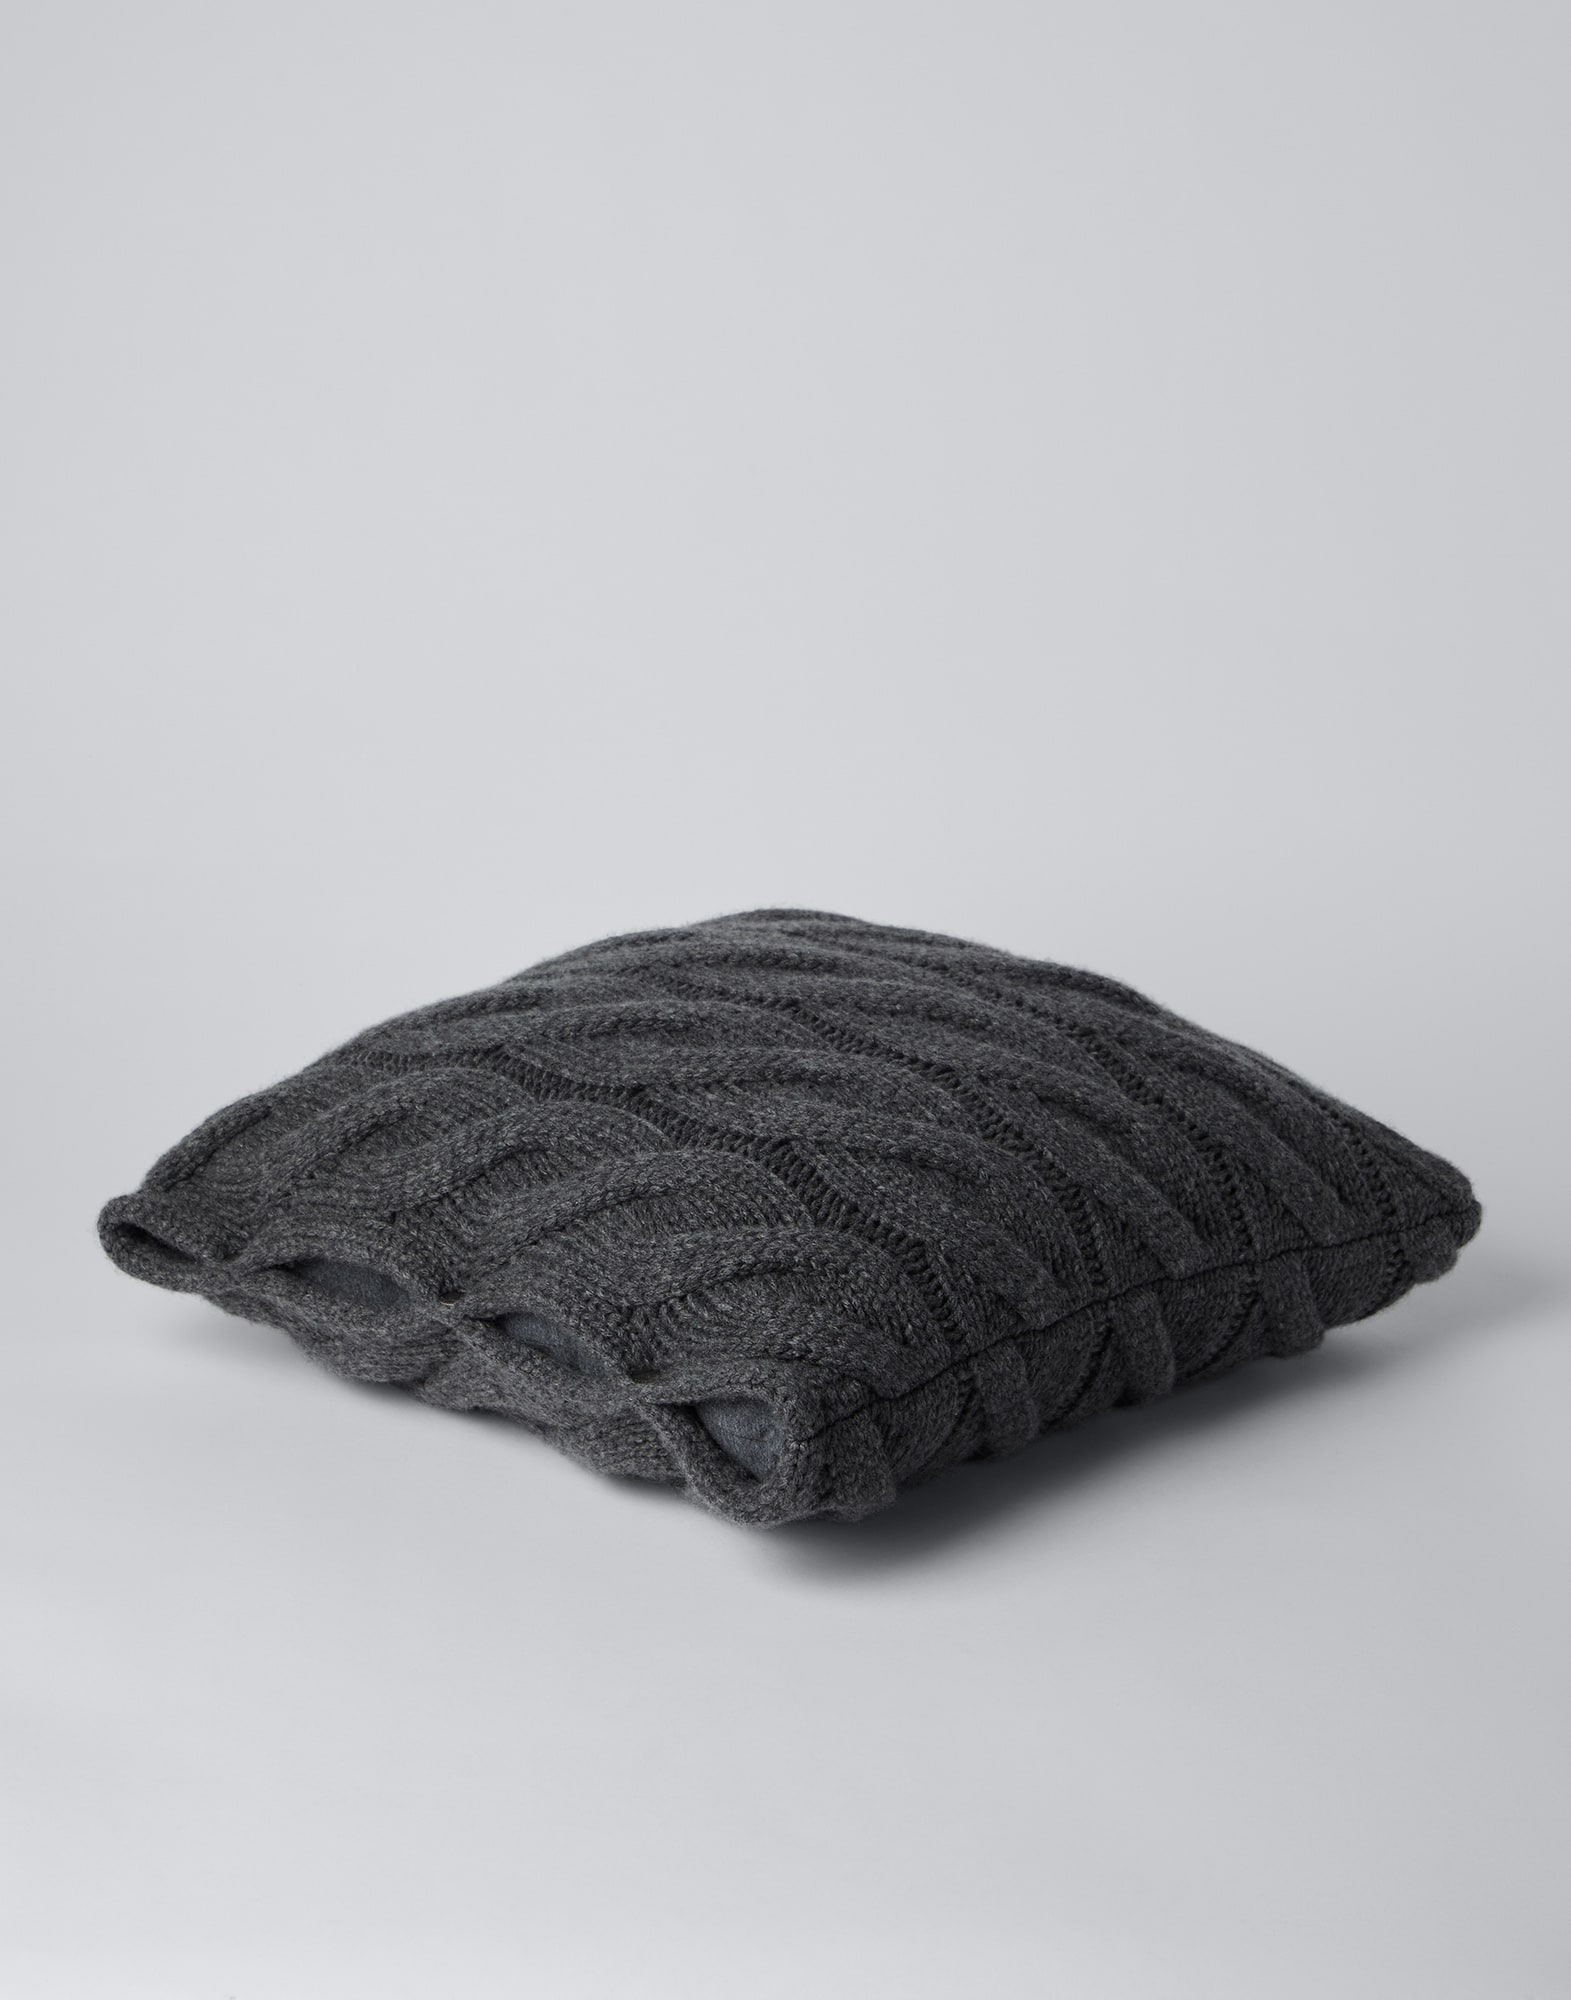 Large knit cushion